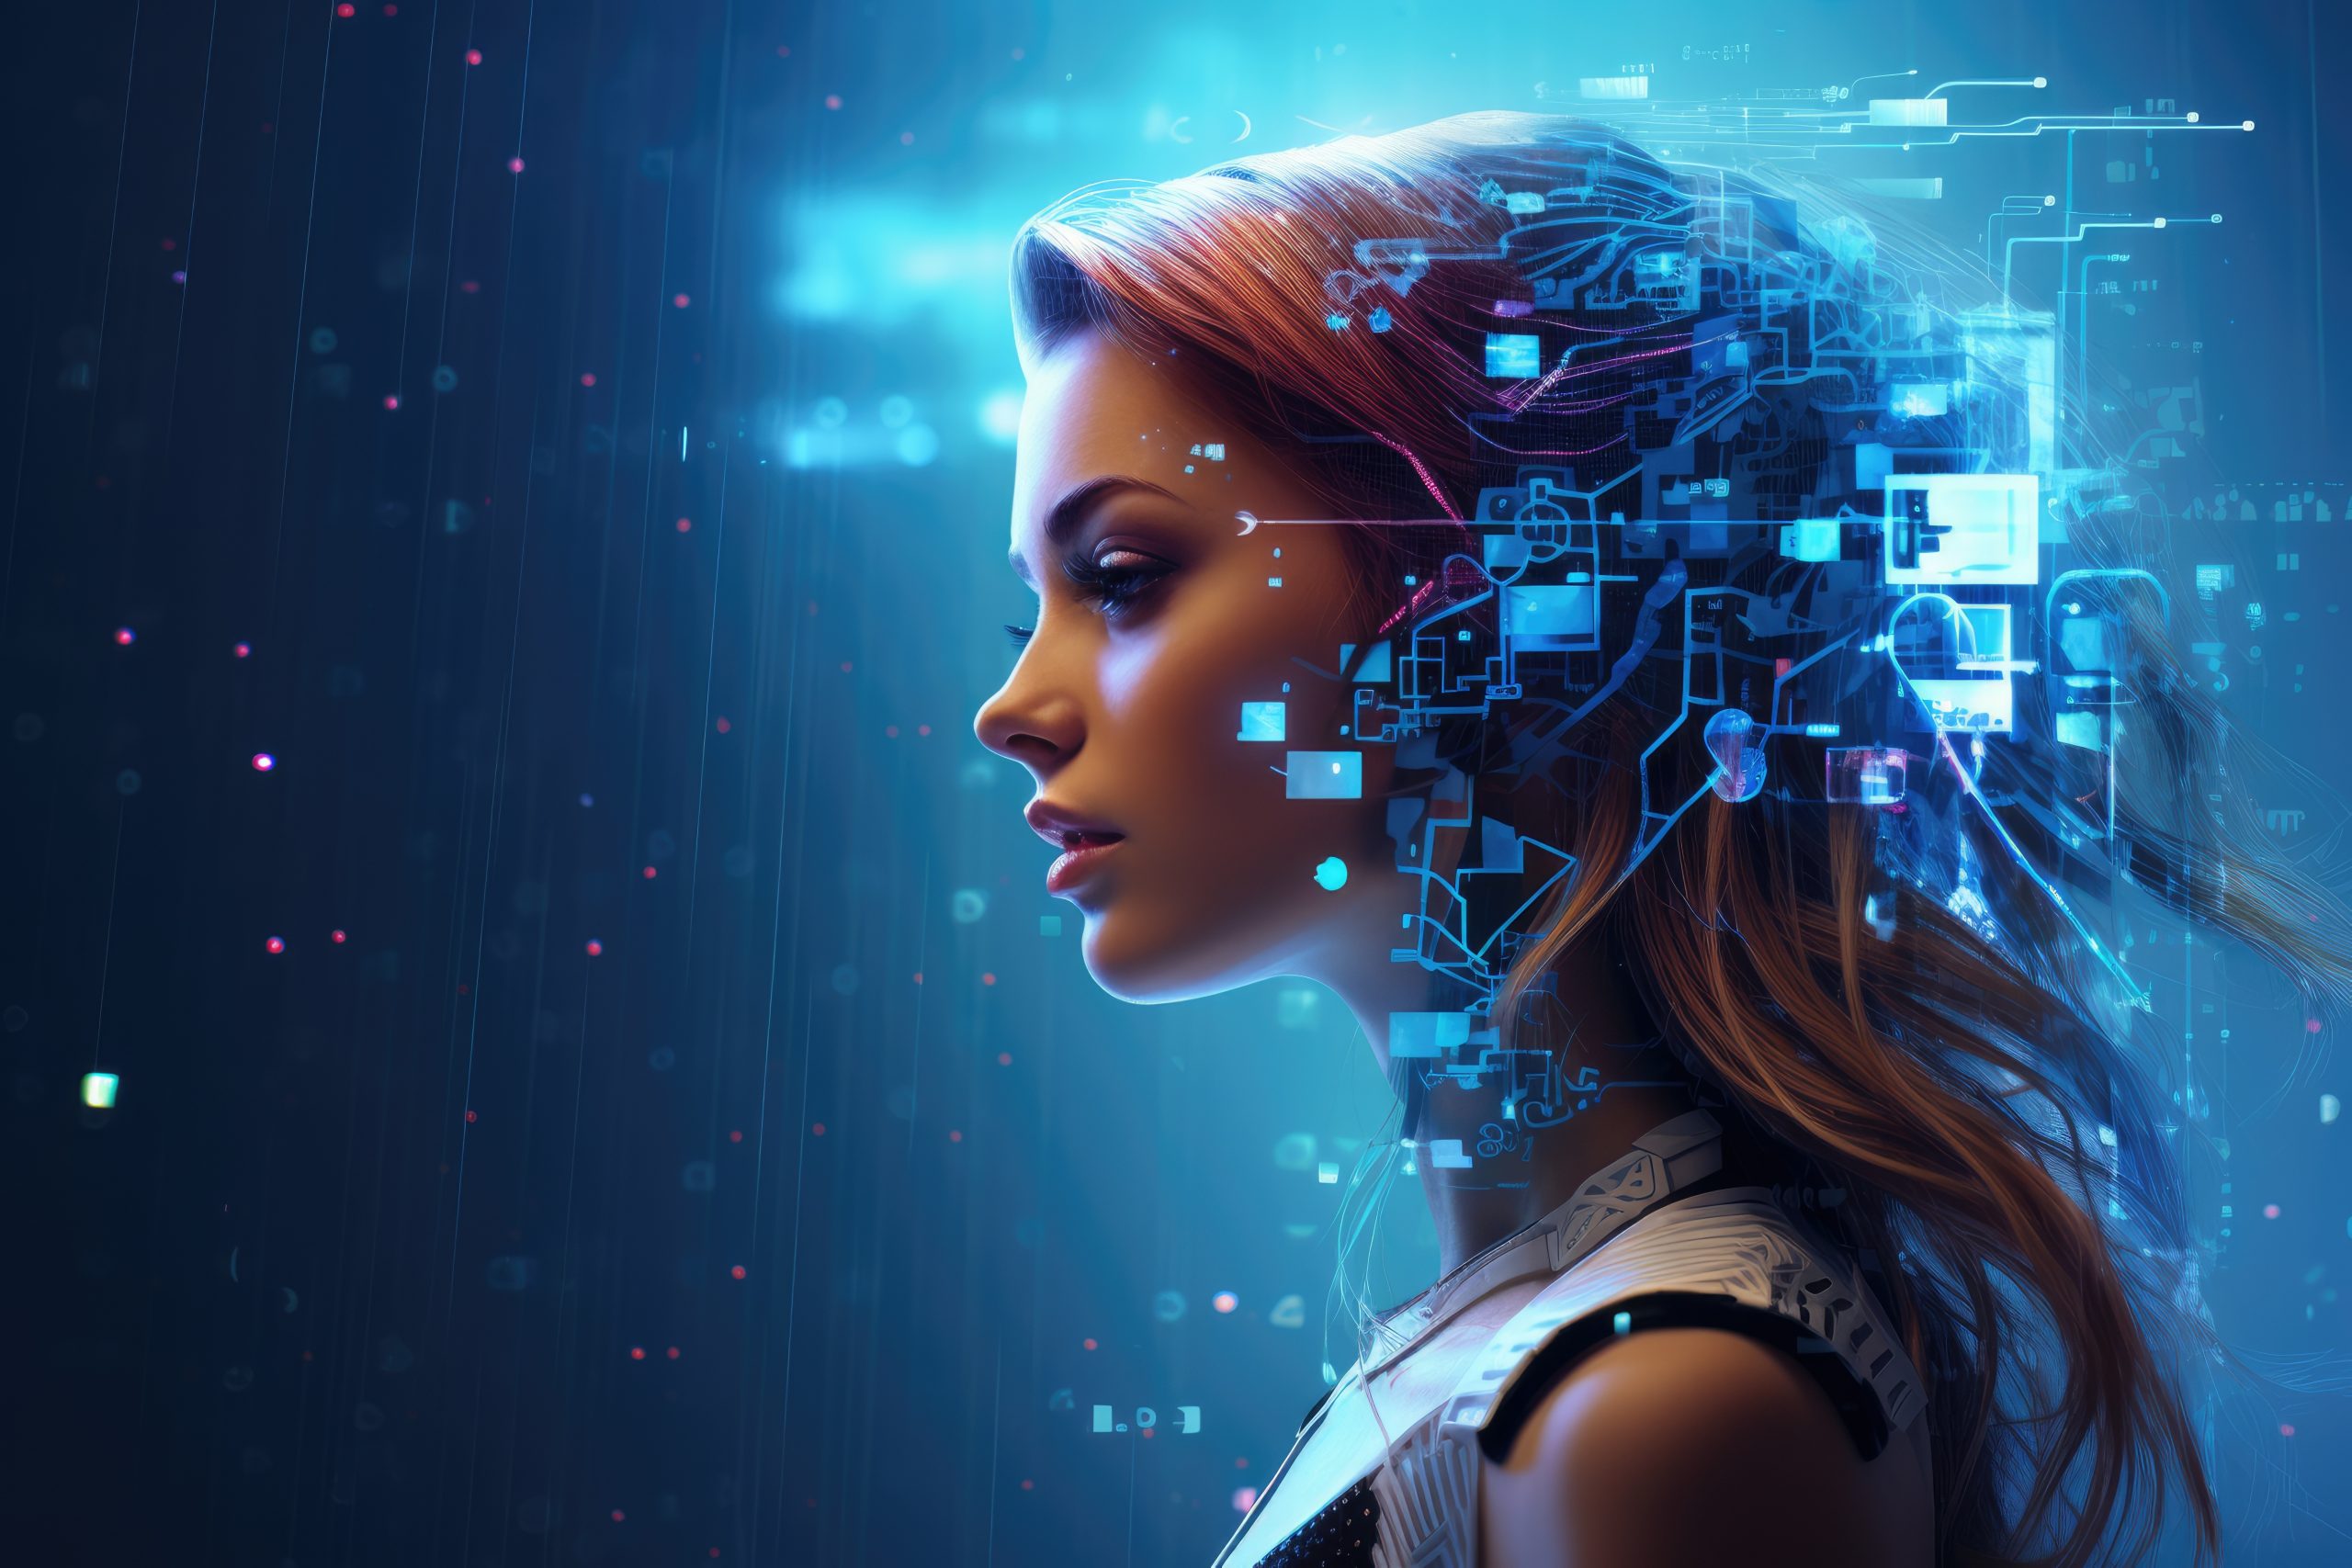 Neural-network-AI-supercomputer-as-a-beautiful-girl